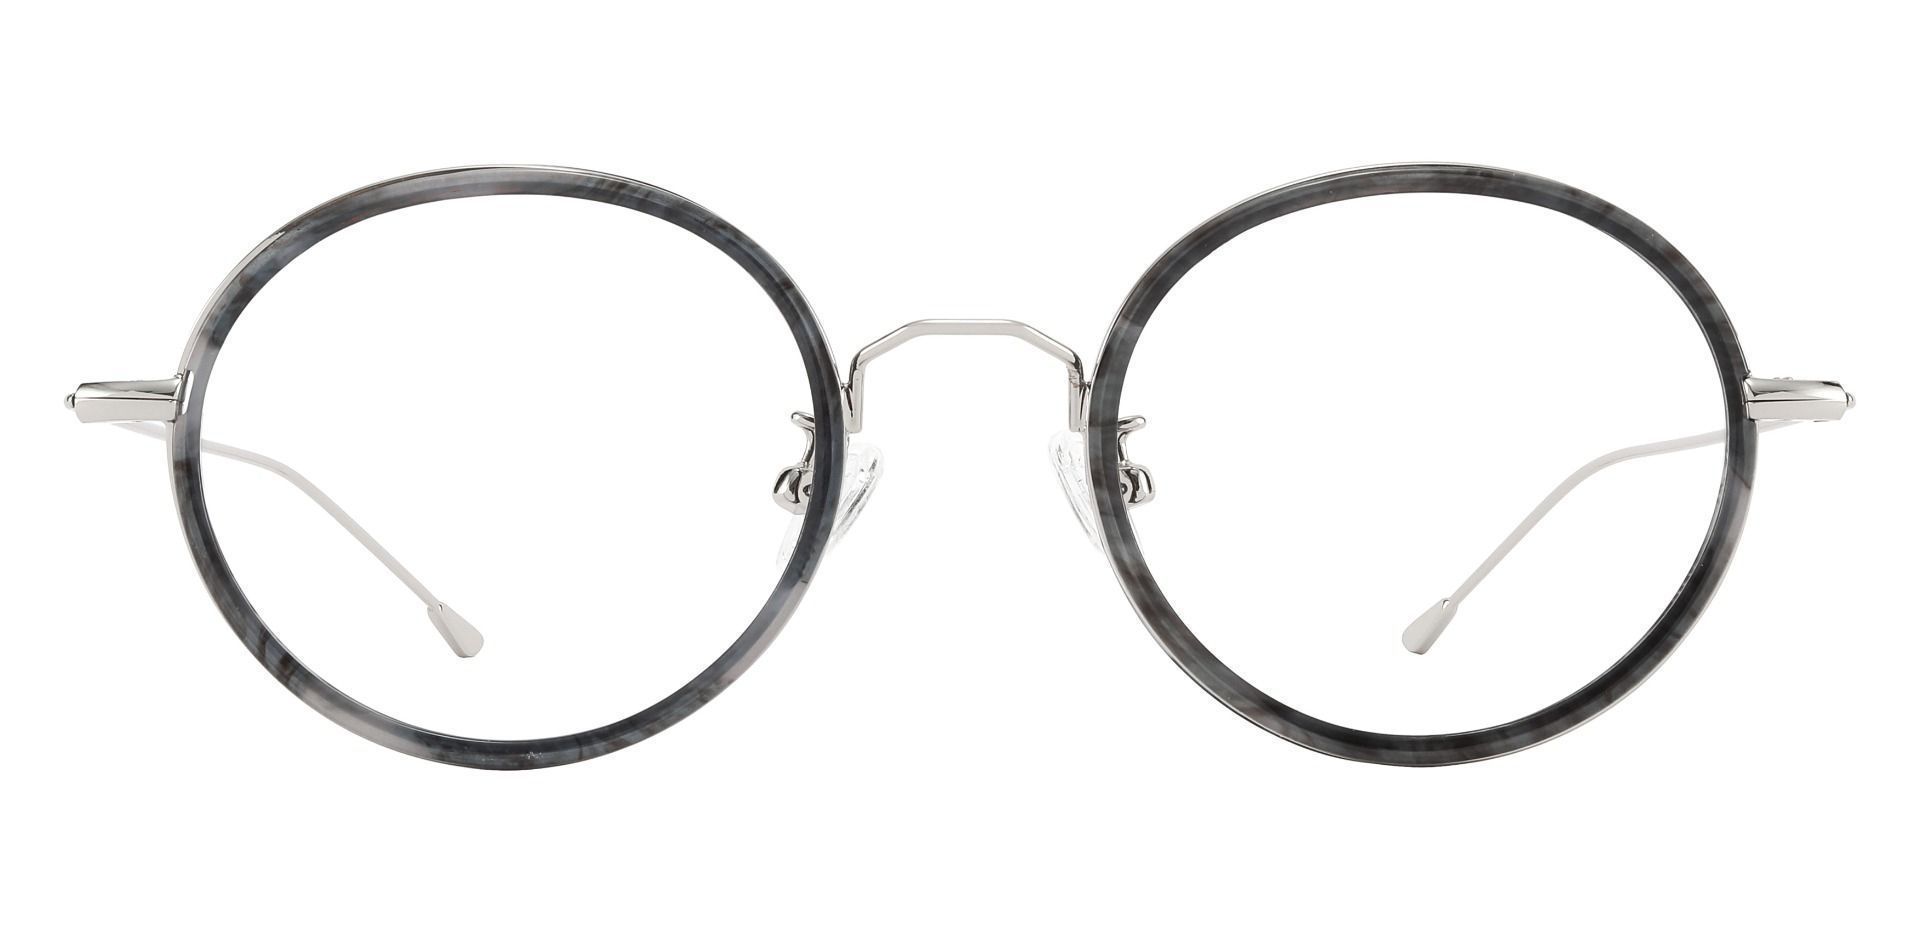 Malverne Oval Reading Glasses - Gray